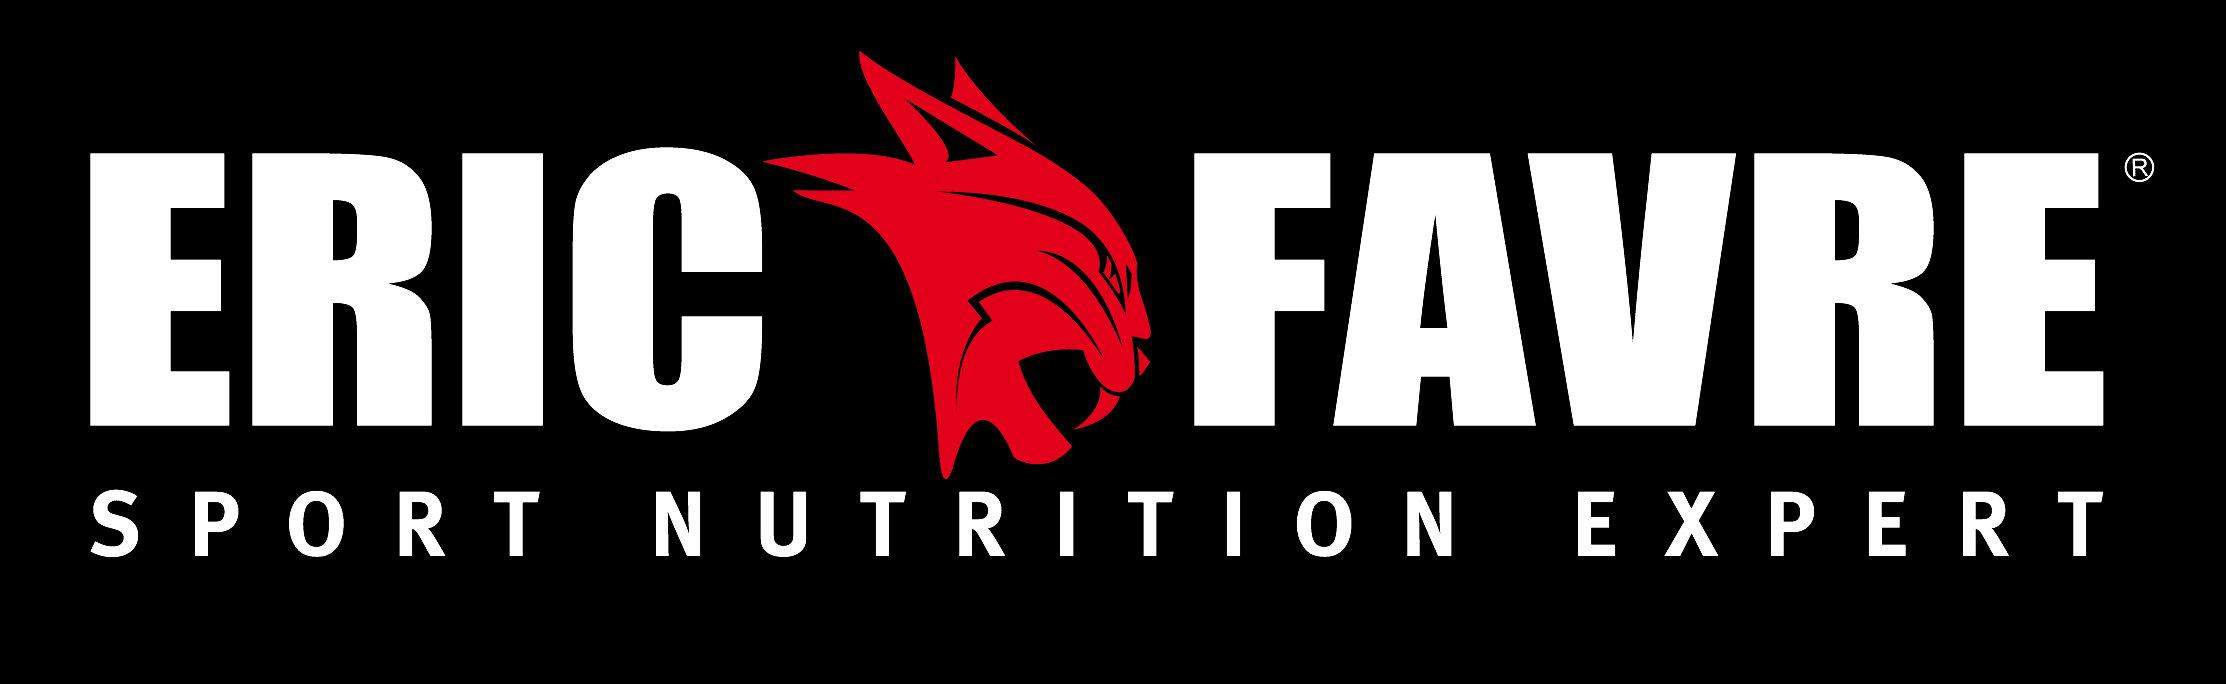 Eric Favre Nutrition